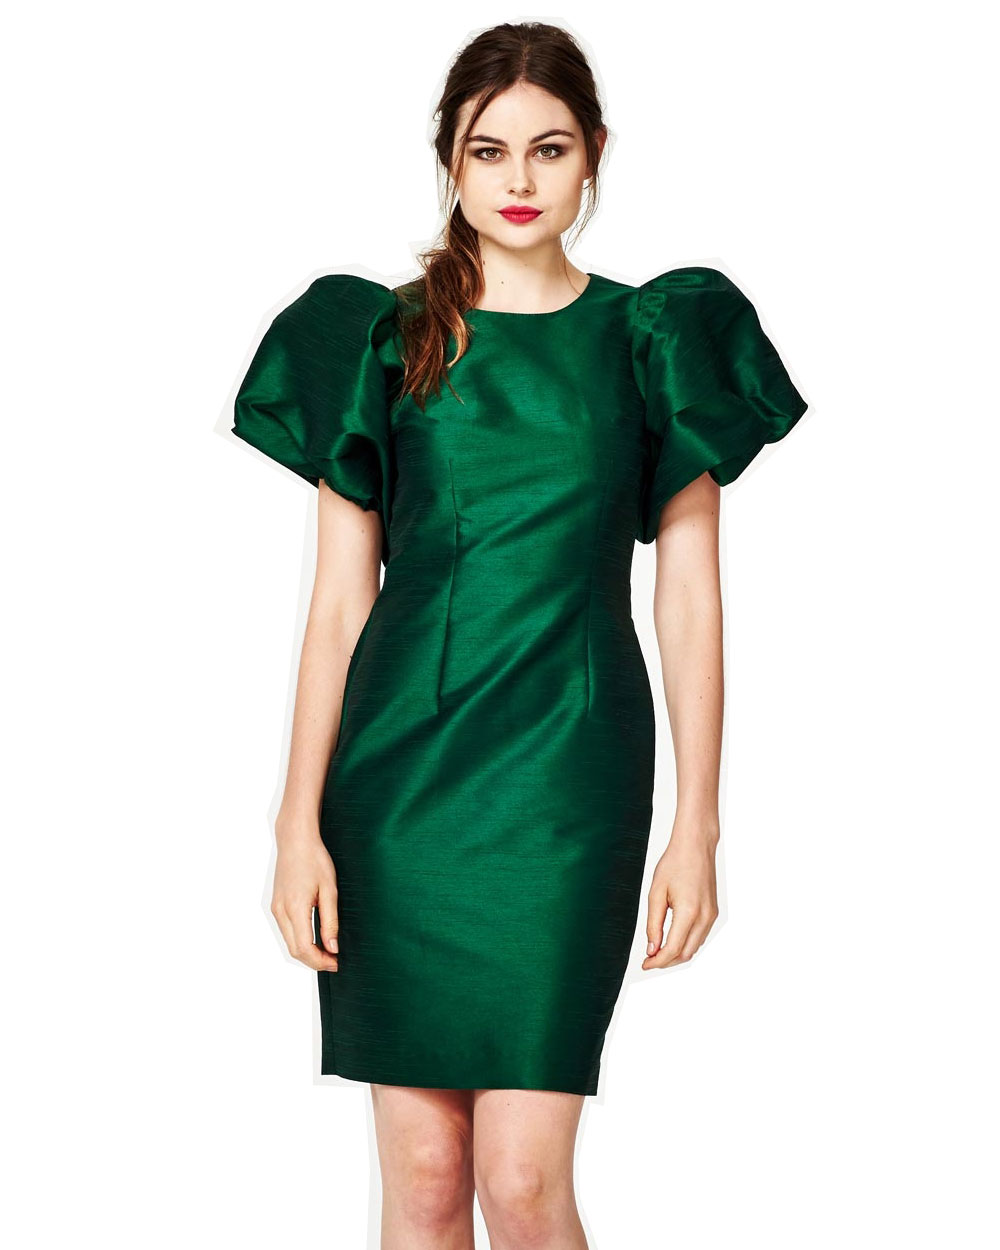 Trelise Cooper dress - $350 (sale price)